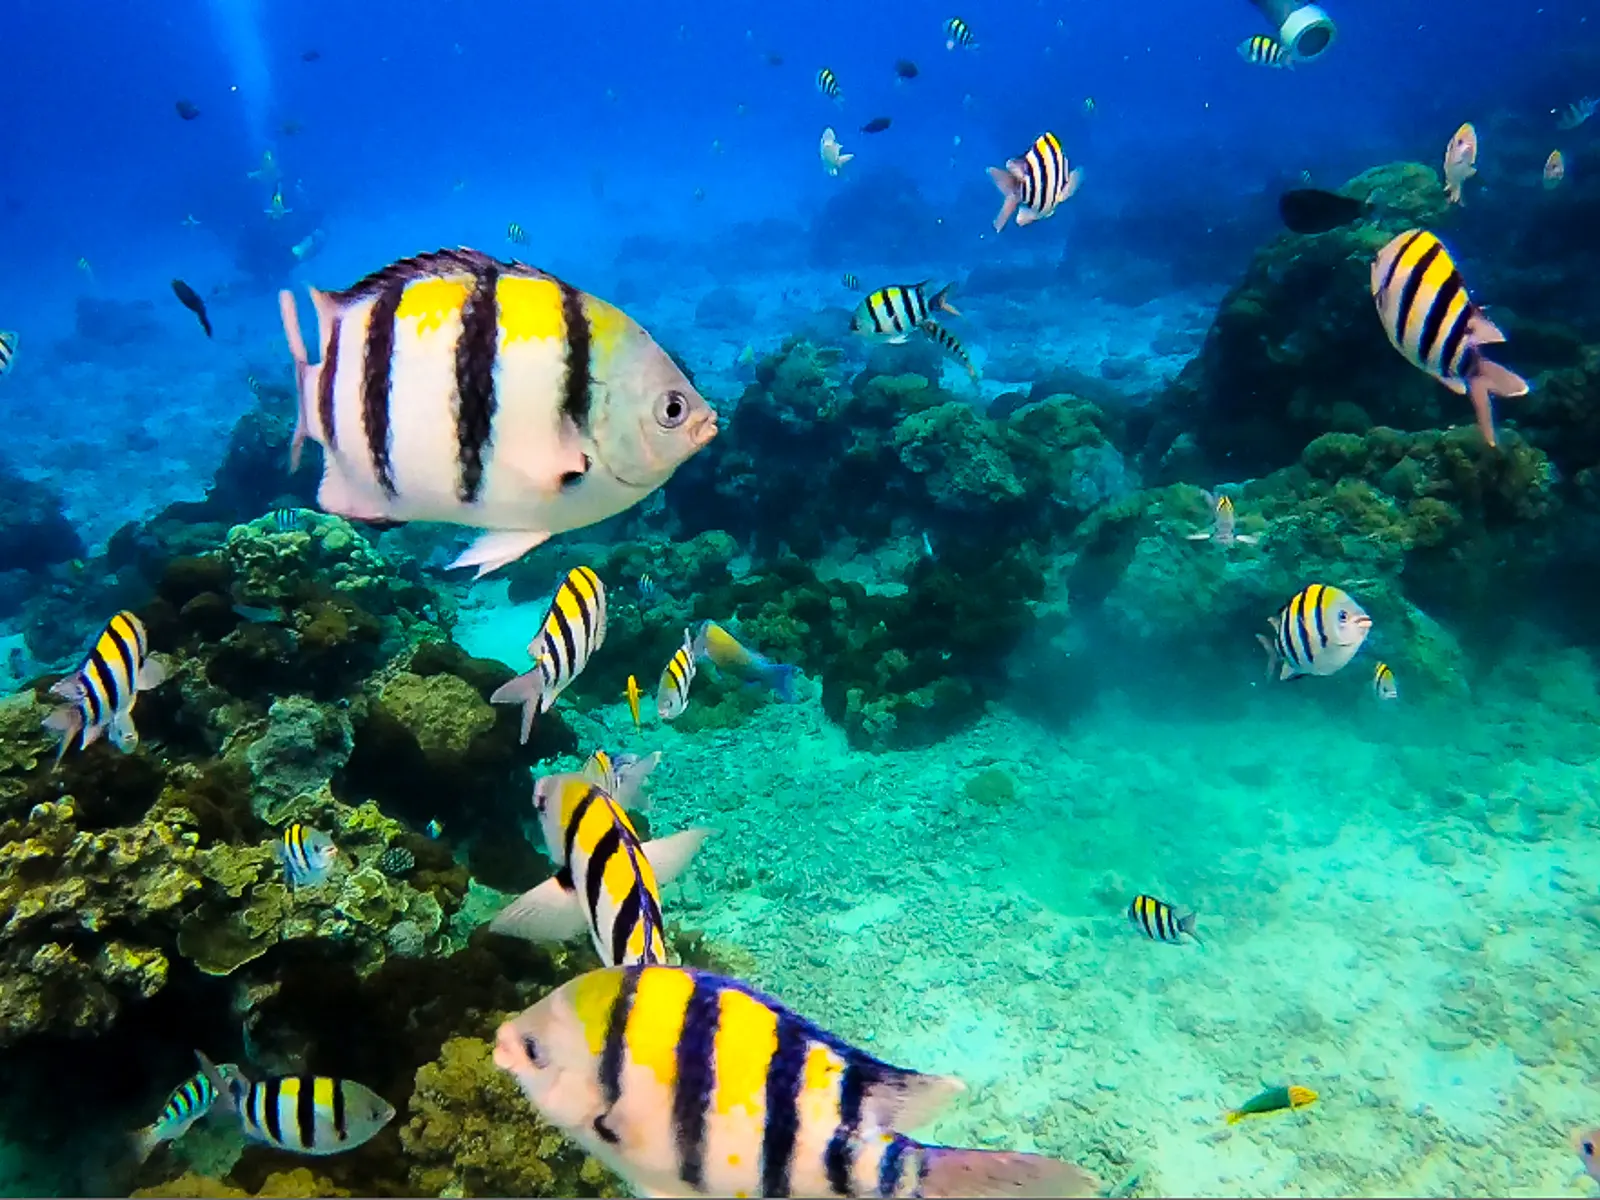 A group of colorful yellow striped fish swim around underground rocks.